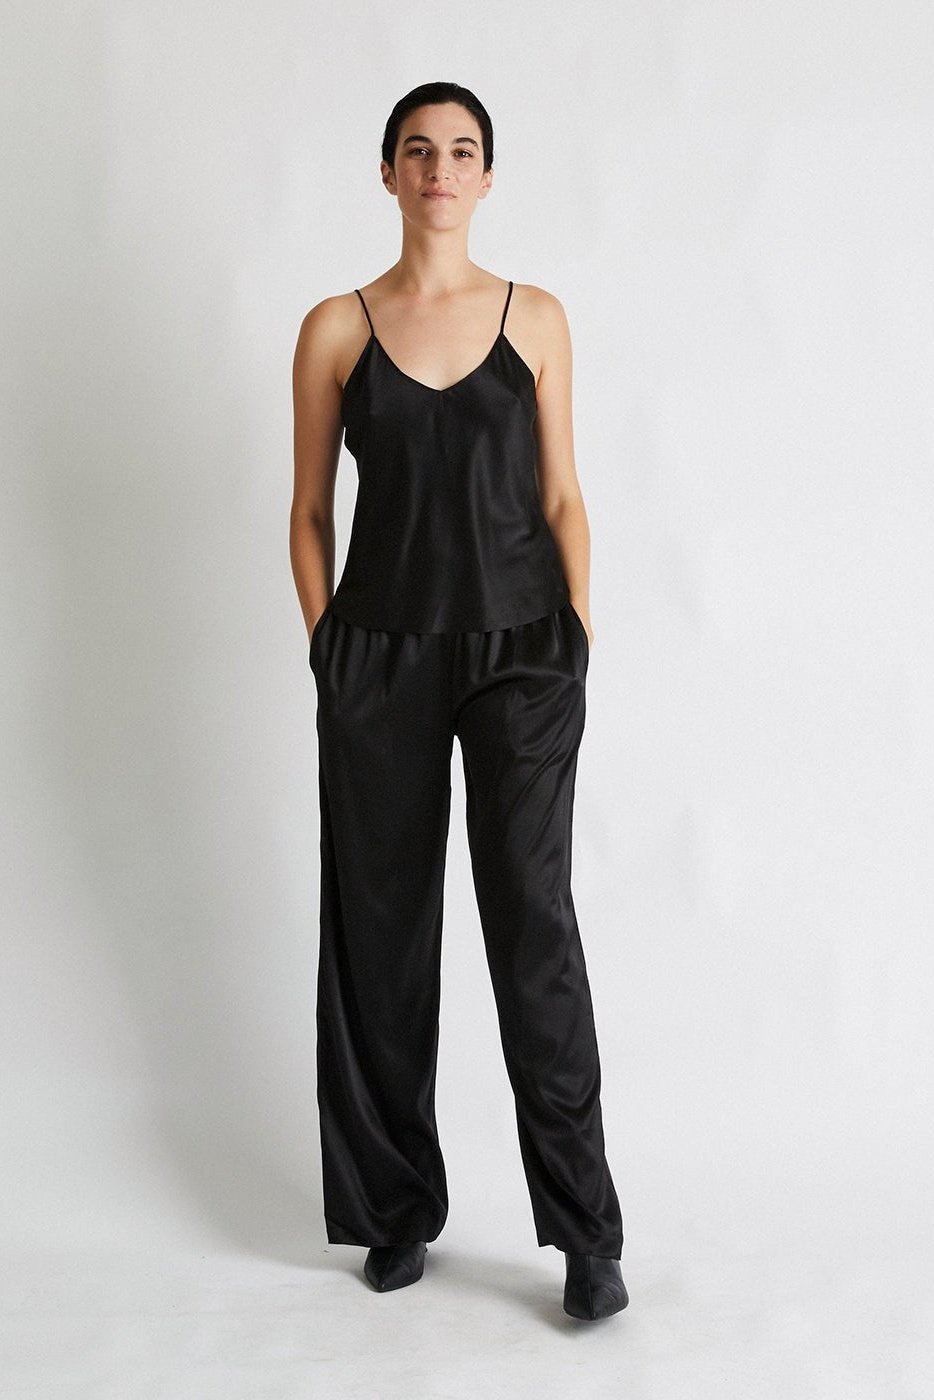 + Beryll Lena Silk Pants | Black - +Beryll Silk Pants Lena | Black - +Beryll Worn By Good People